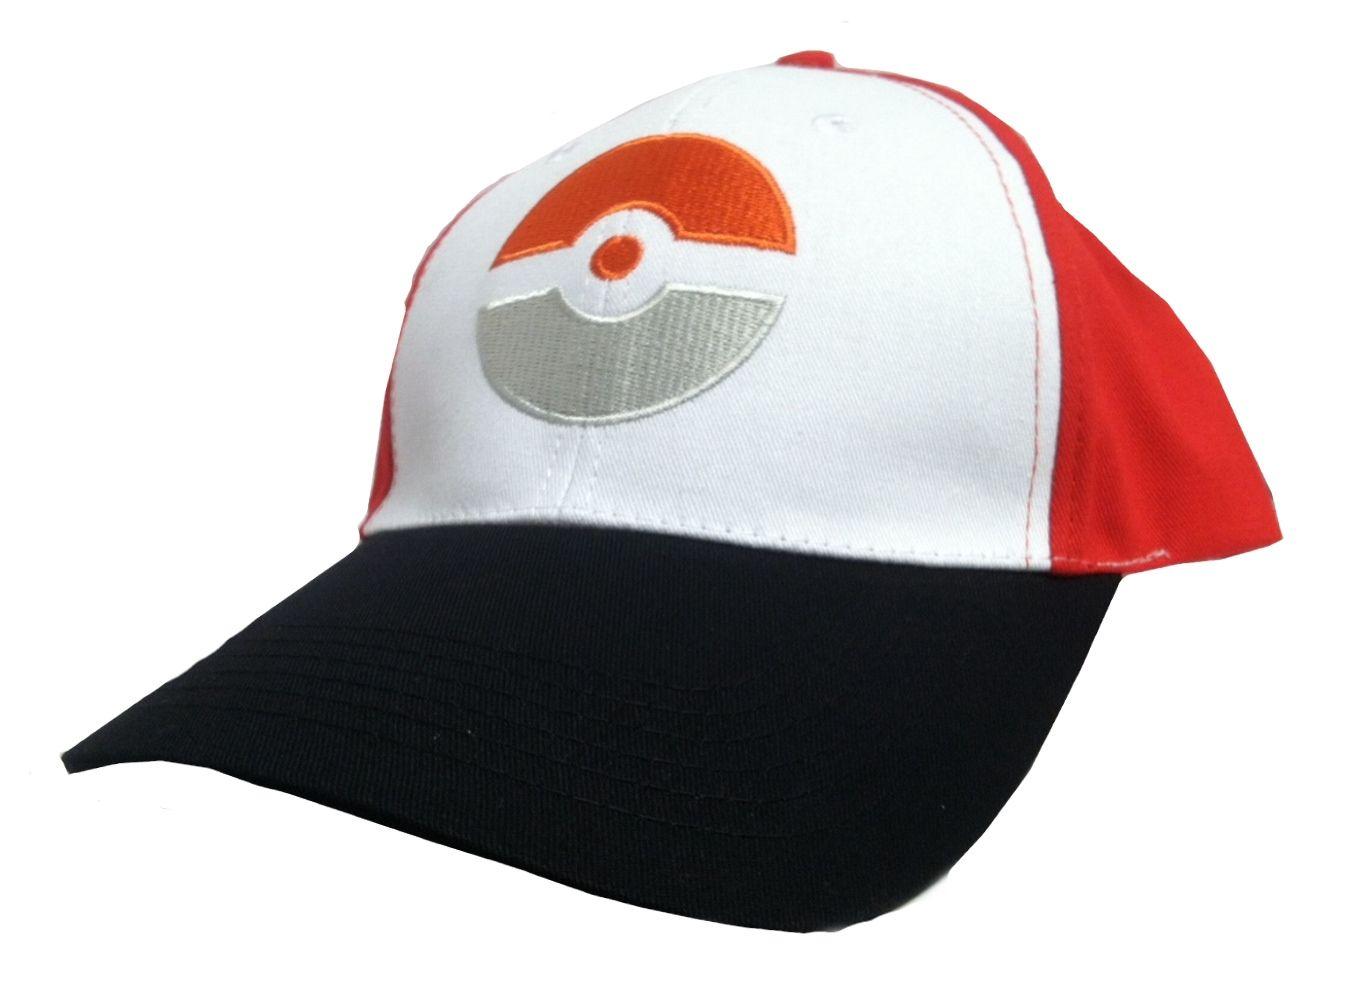 Pokeball Logo - Red White And Black Hat With Orange Pokeball Logo